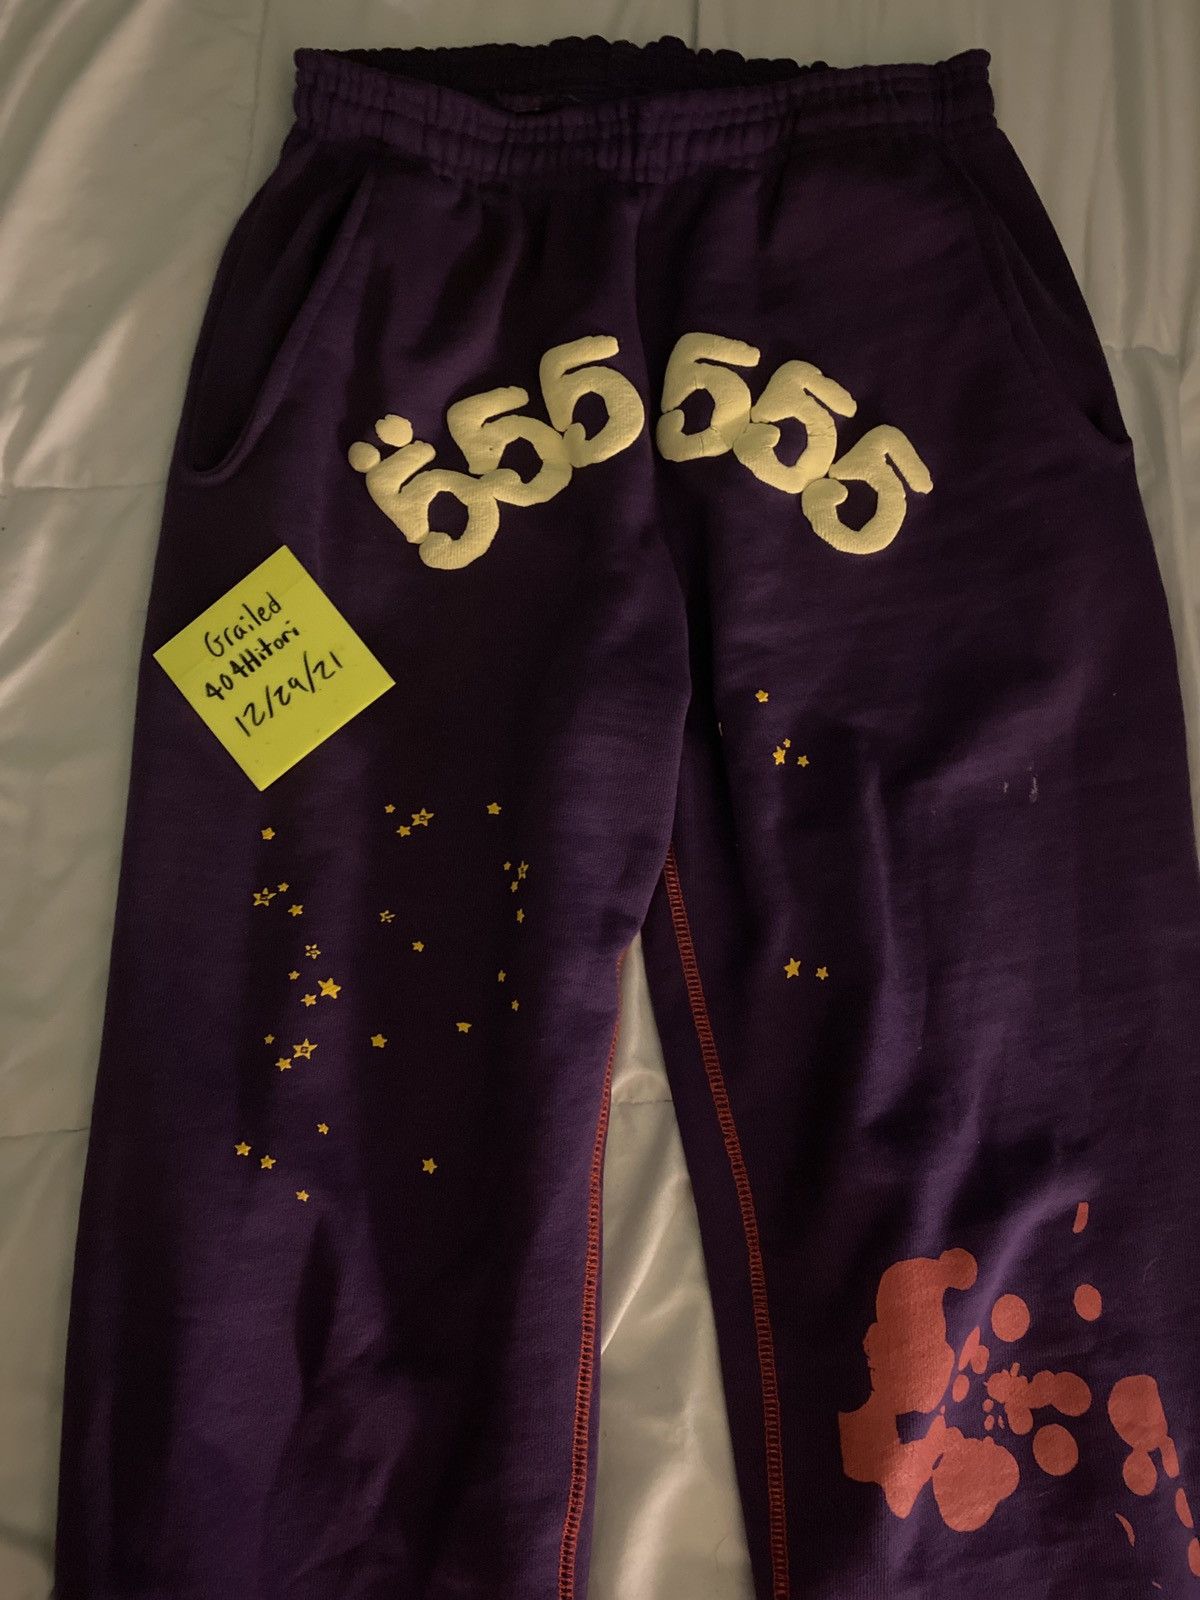 Young Thug Sp5der purple Sweatpants (s)